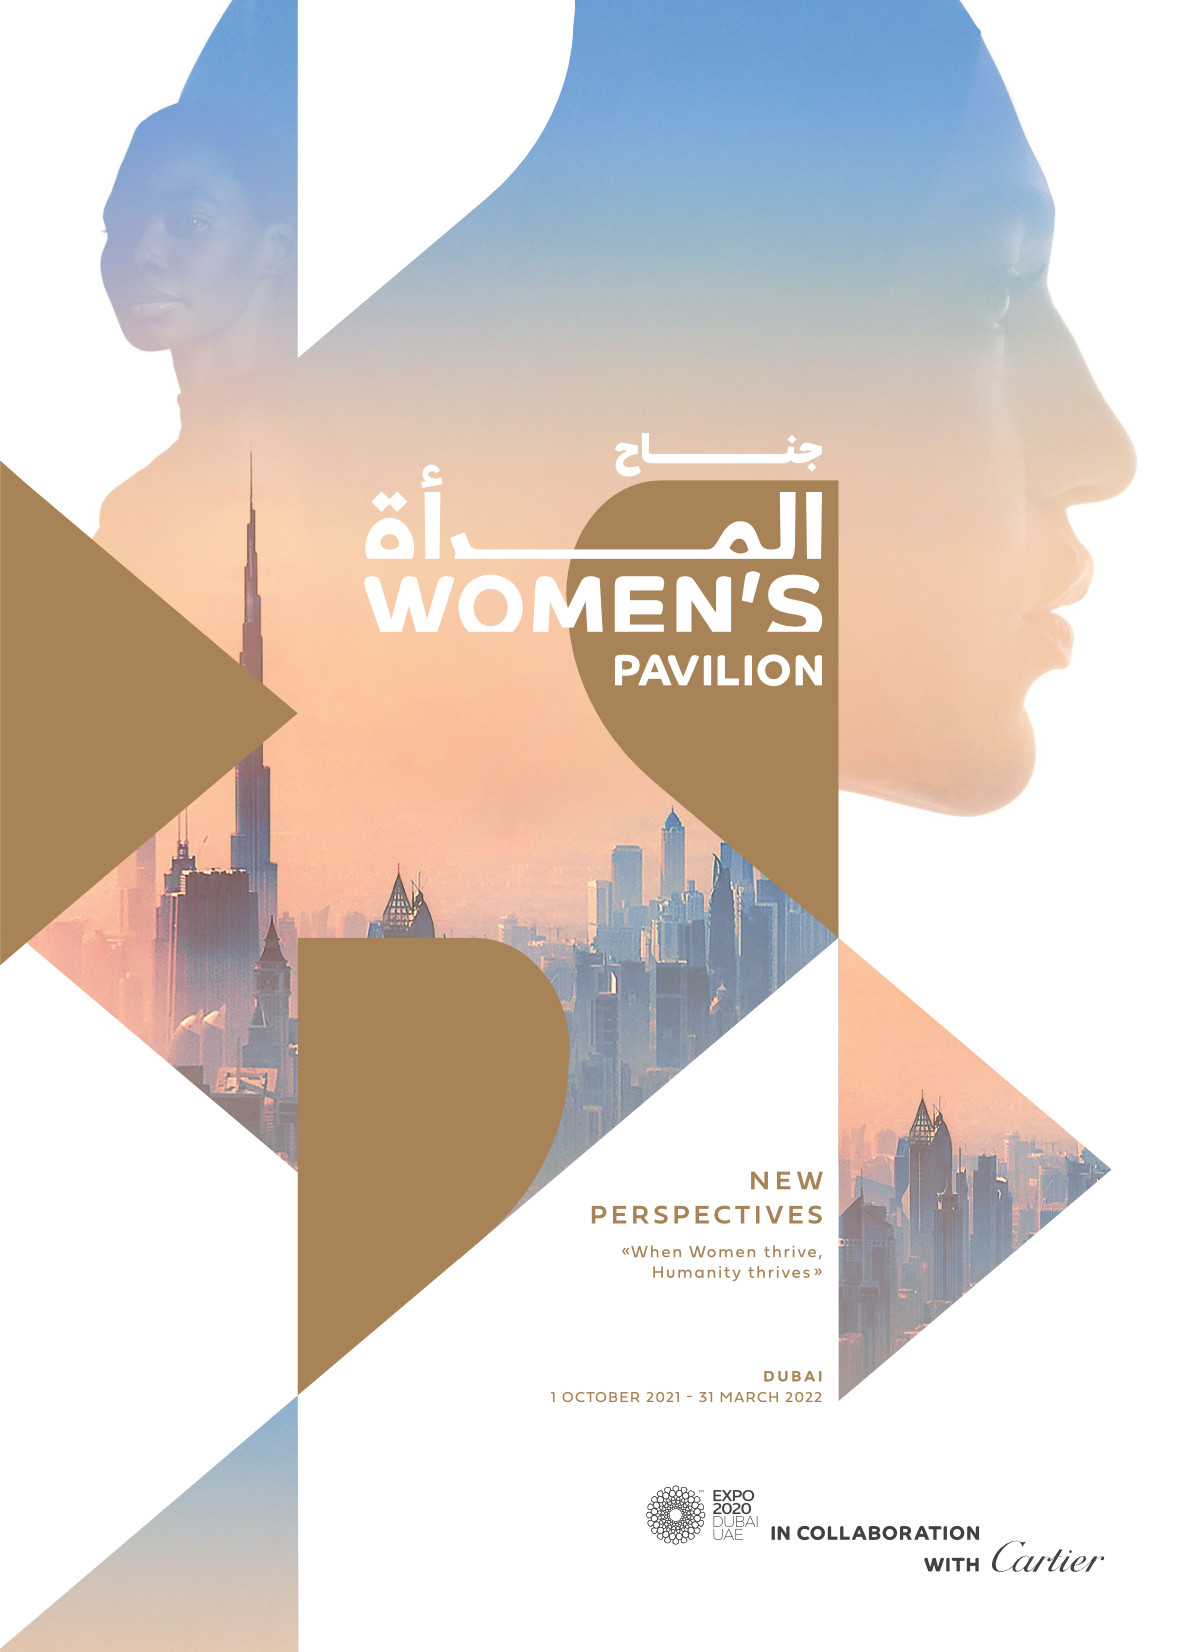 Expo 2020 Dubai Unveils The Women’s Pavilion In Collaboration With Cartier